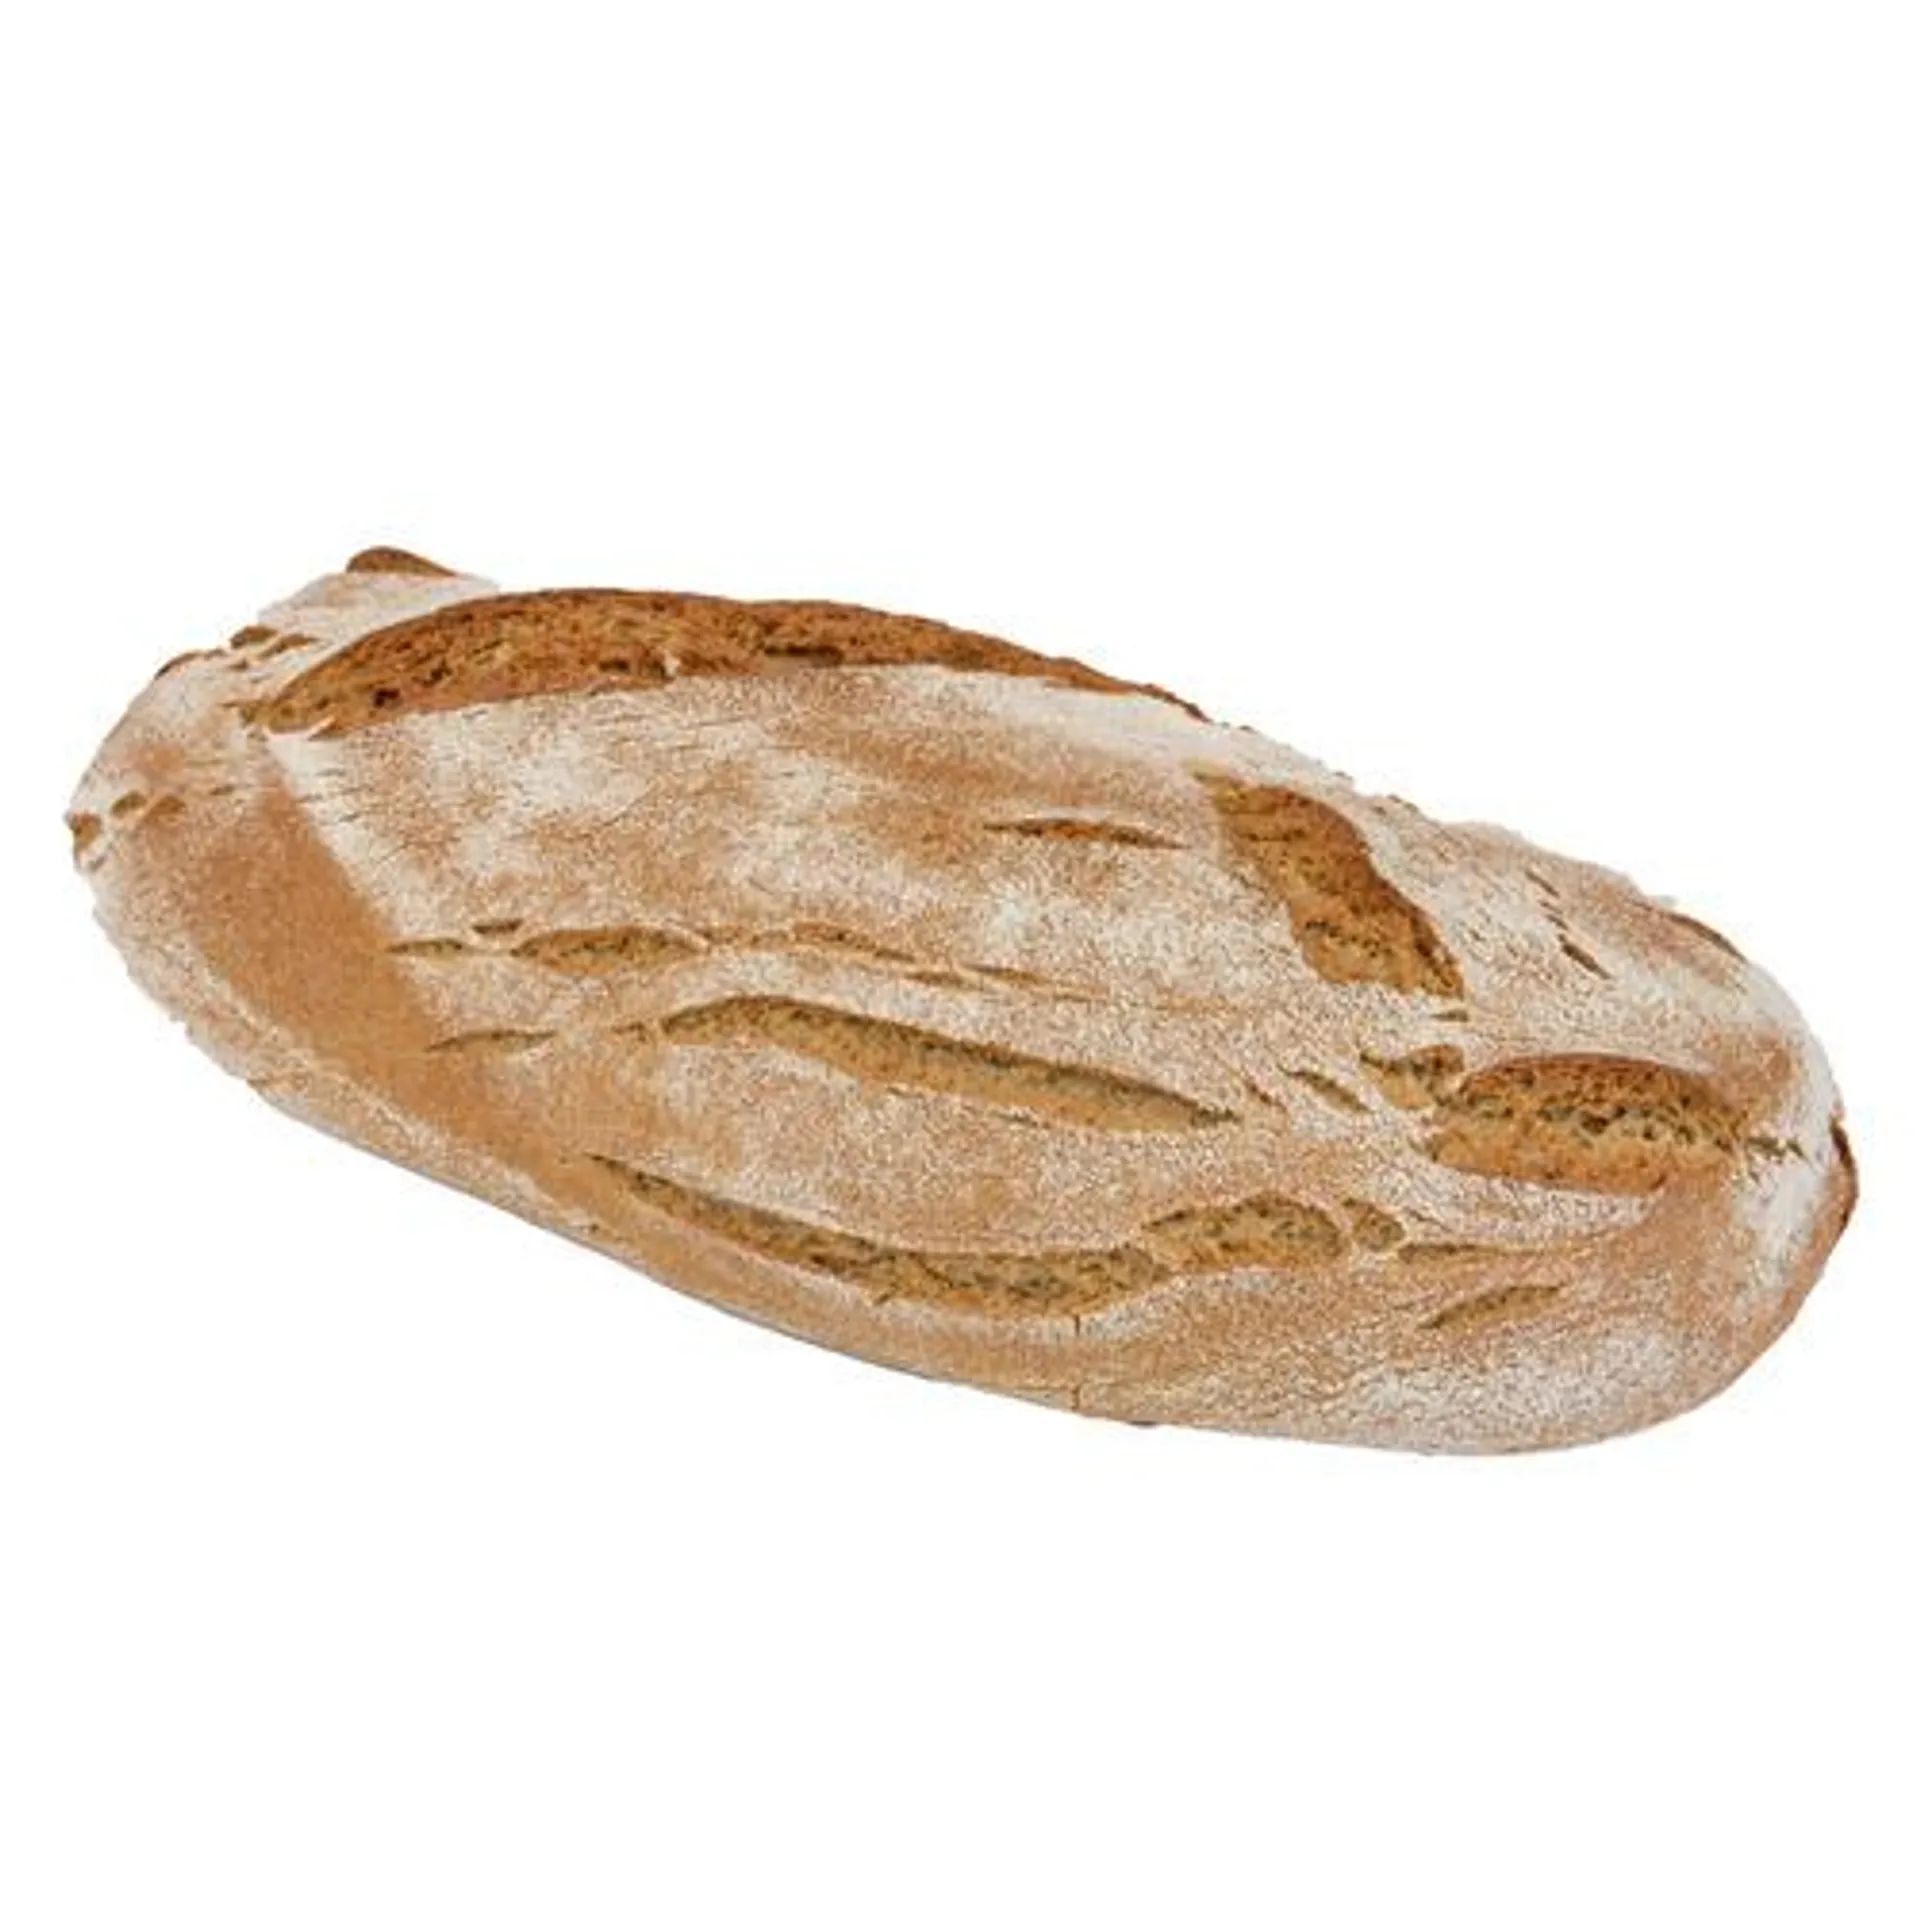 German sourdough bread